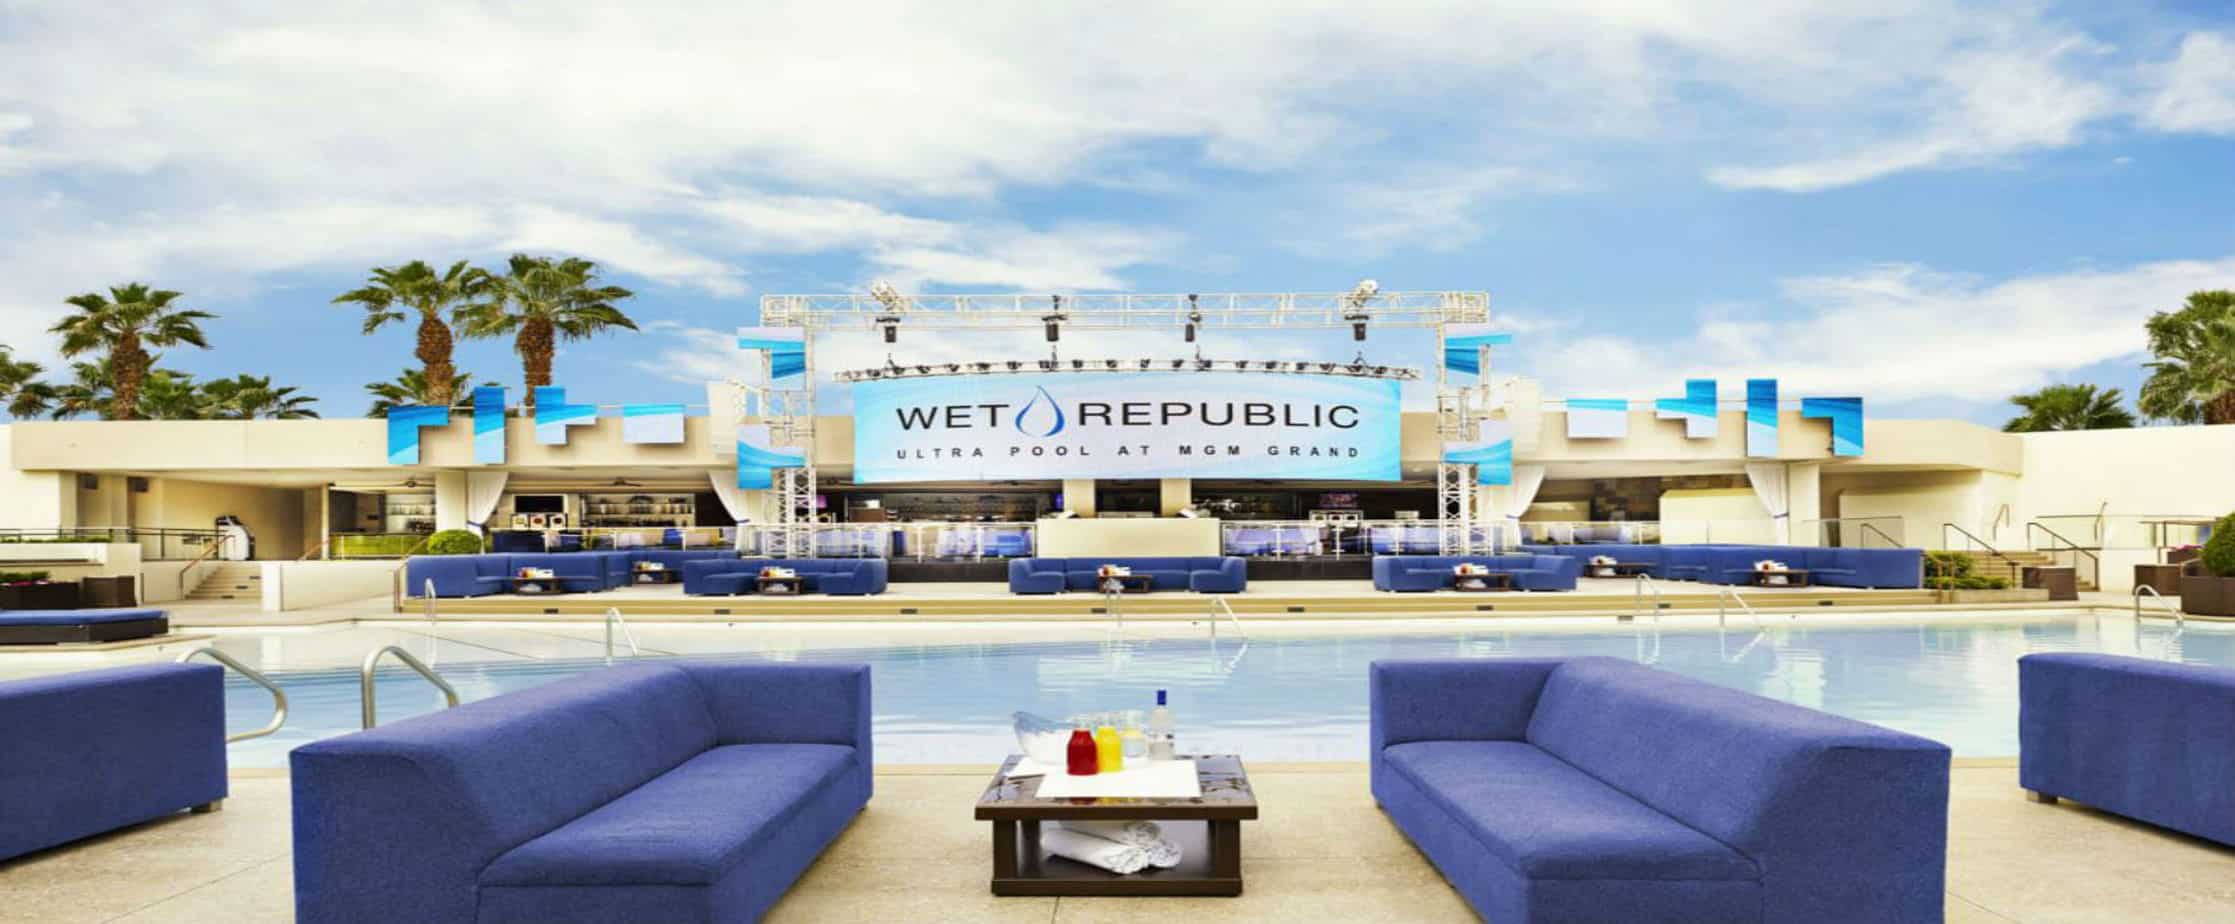 Wet Republic Ultra Pool Events & Bottle Service